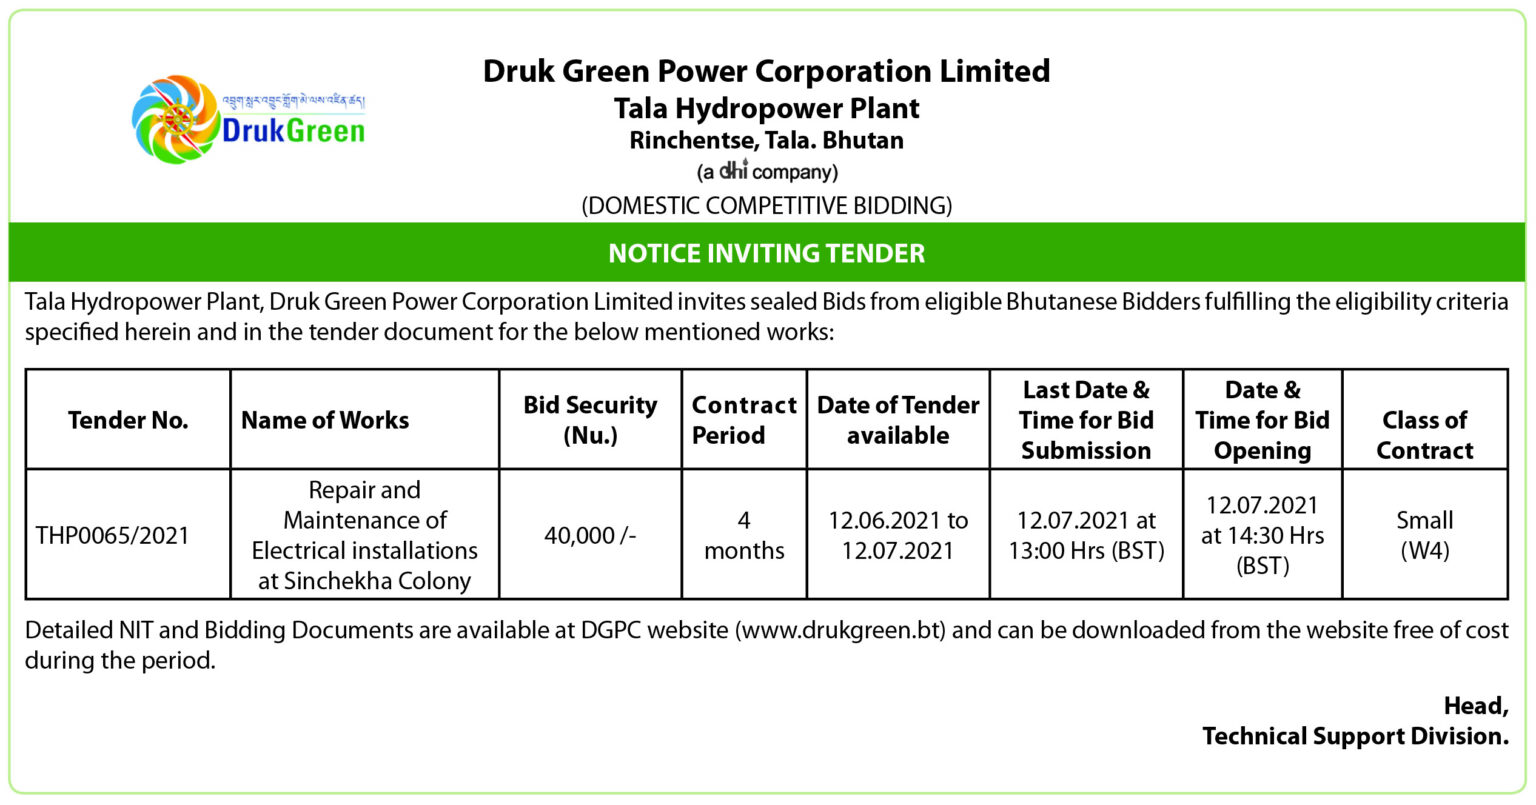 Druk Green Power Corporation Limited